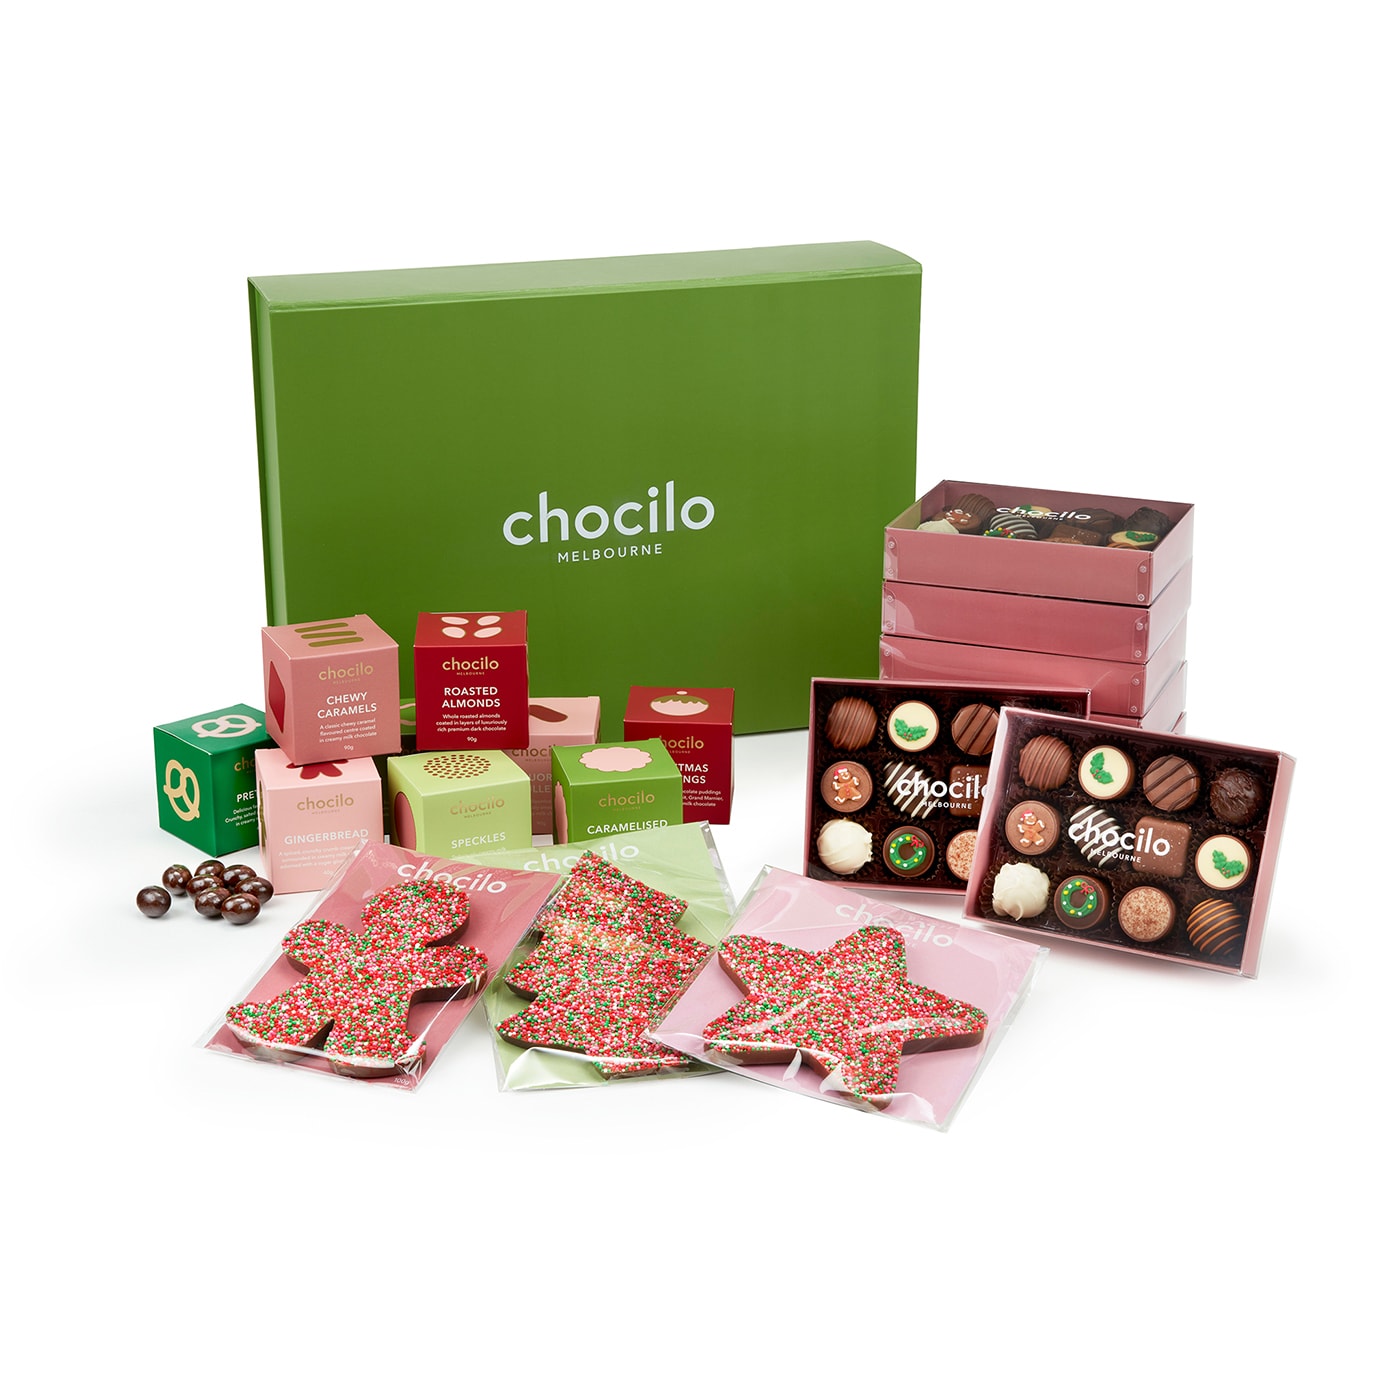 Chocilo Melbourne Festive Treats Christmas Luxury Chocolate Hamper